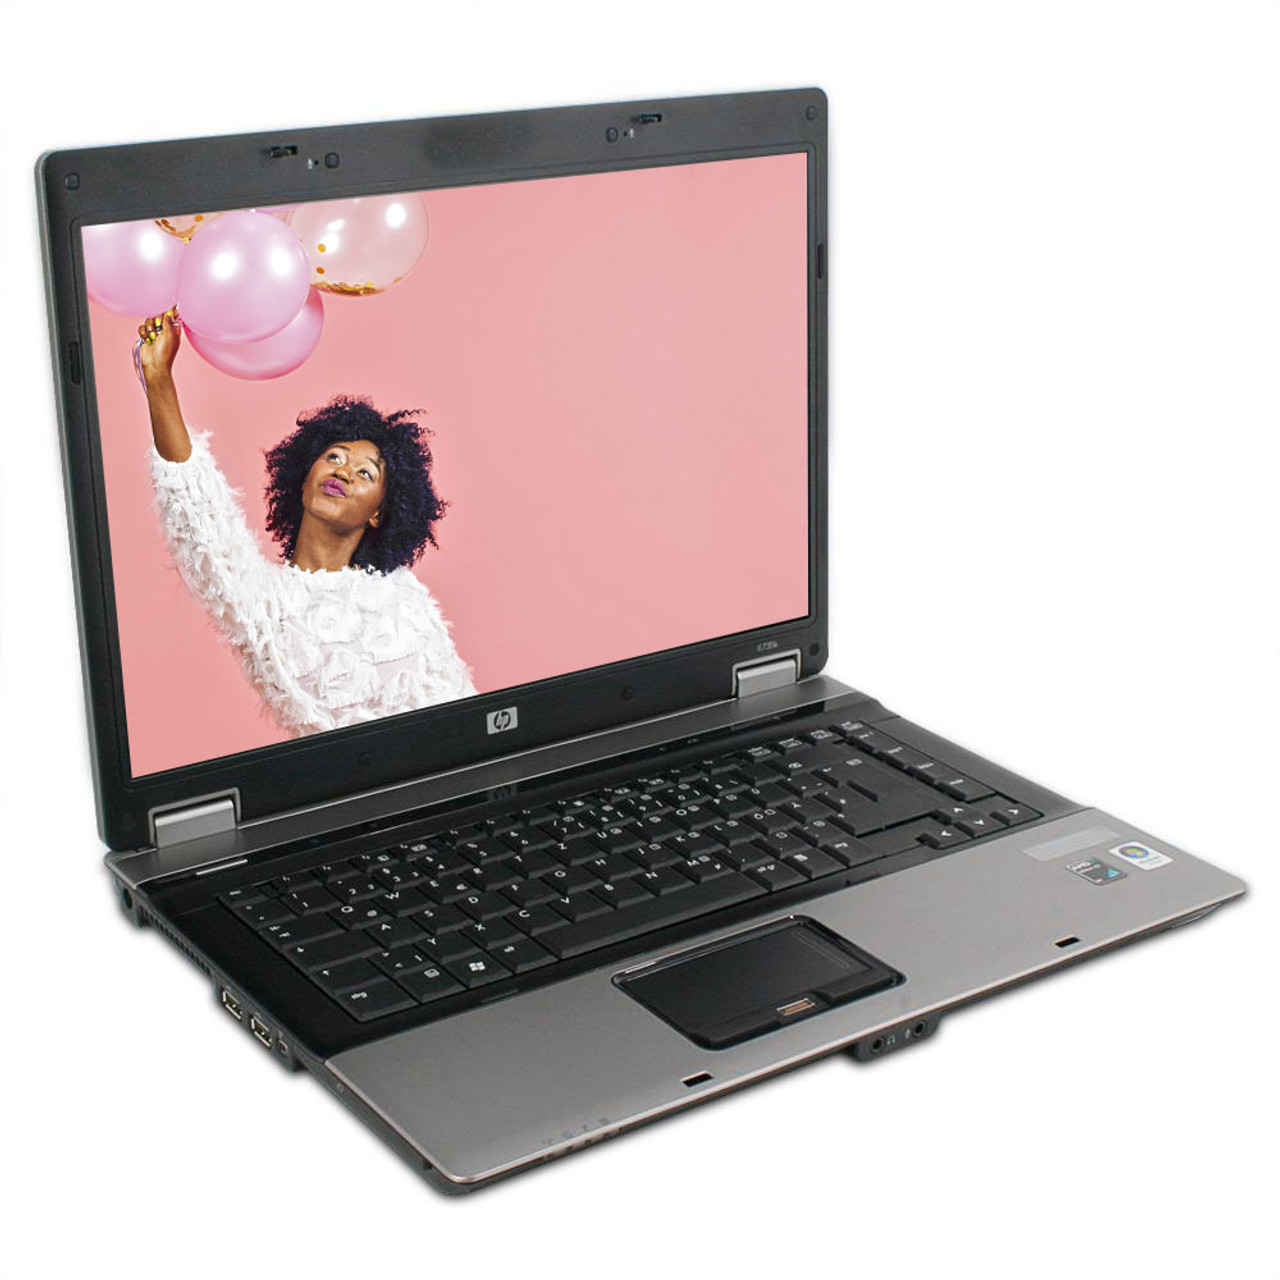 HP Compaq Laptop 6735b 15.4" AMD Turion II Dual Core 2.2GHz 4GB RAM 500GB  Windows 10 Home Bluetooth DVD WiFi